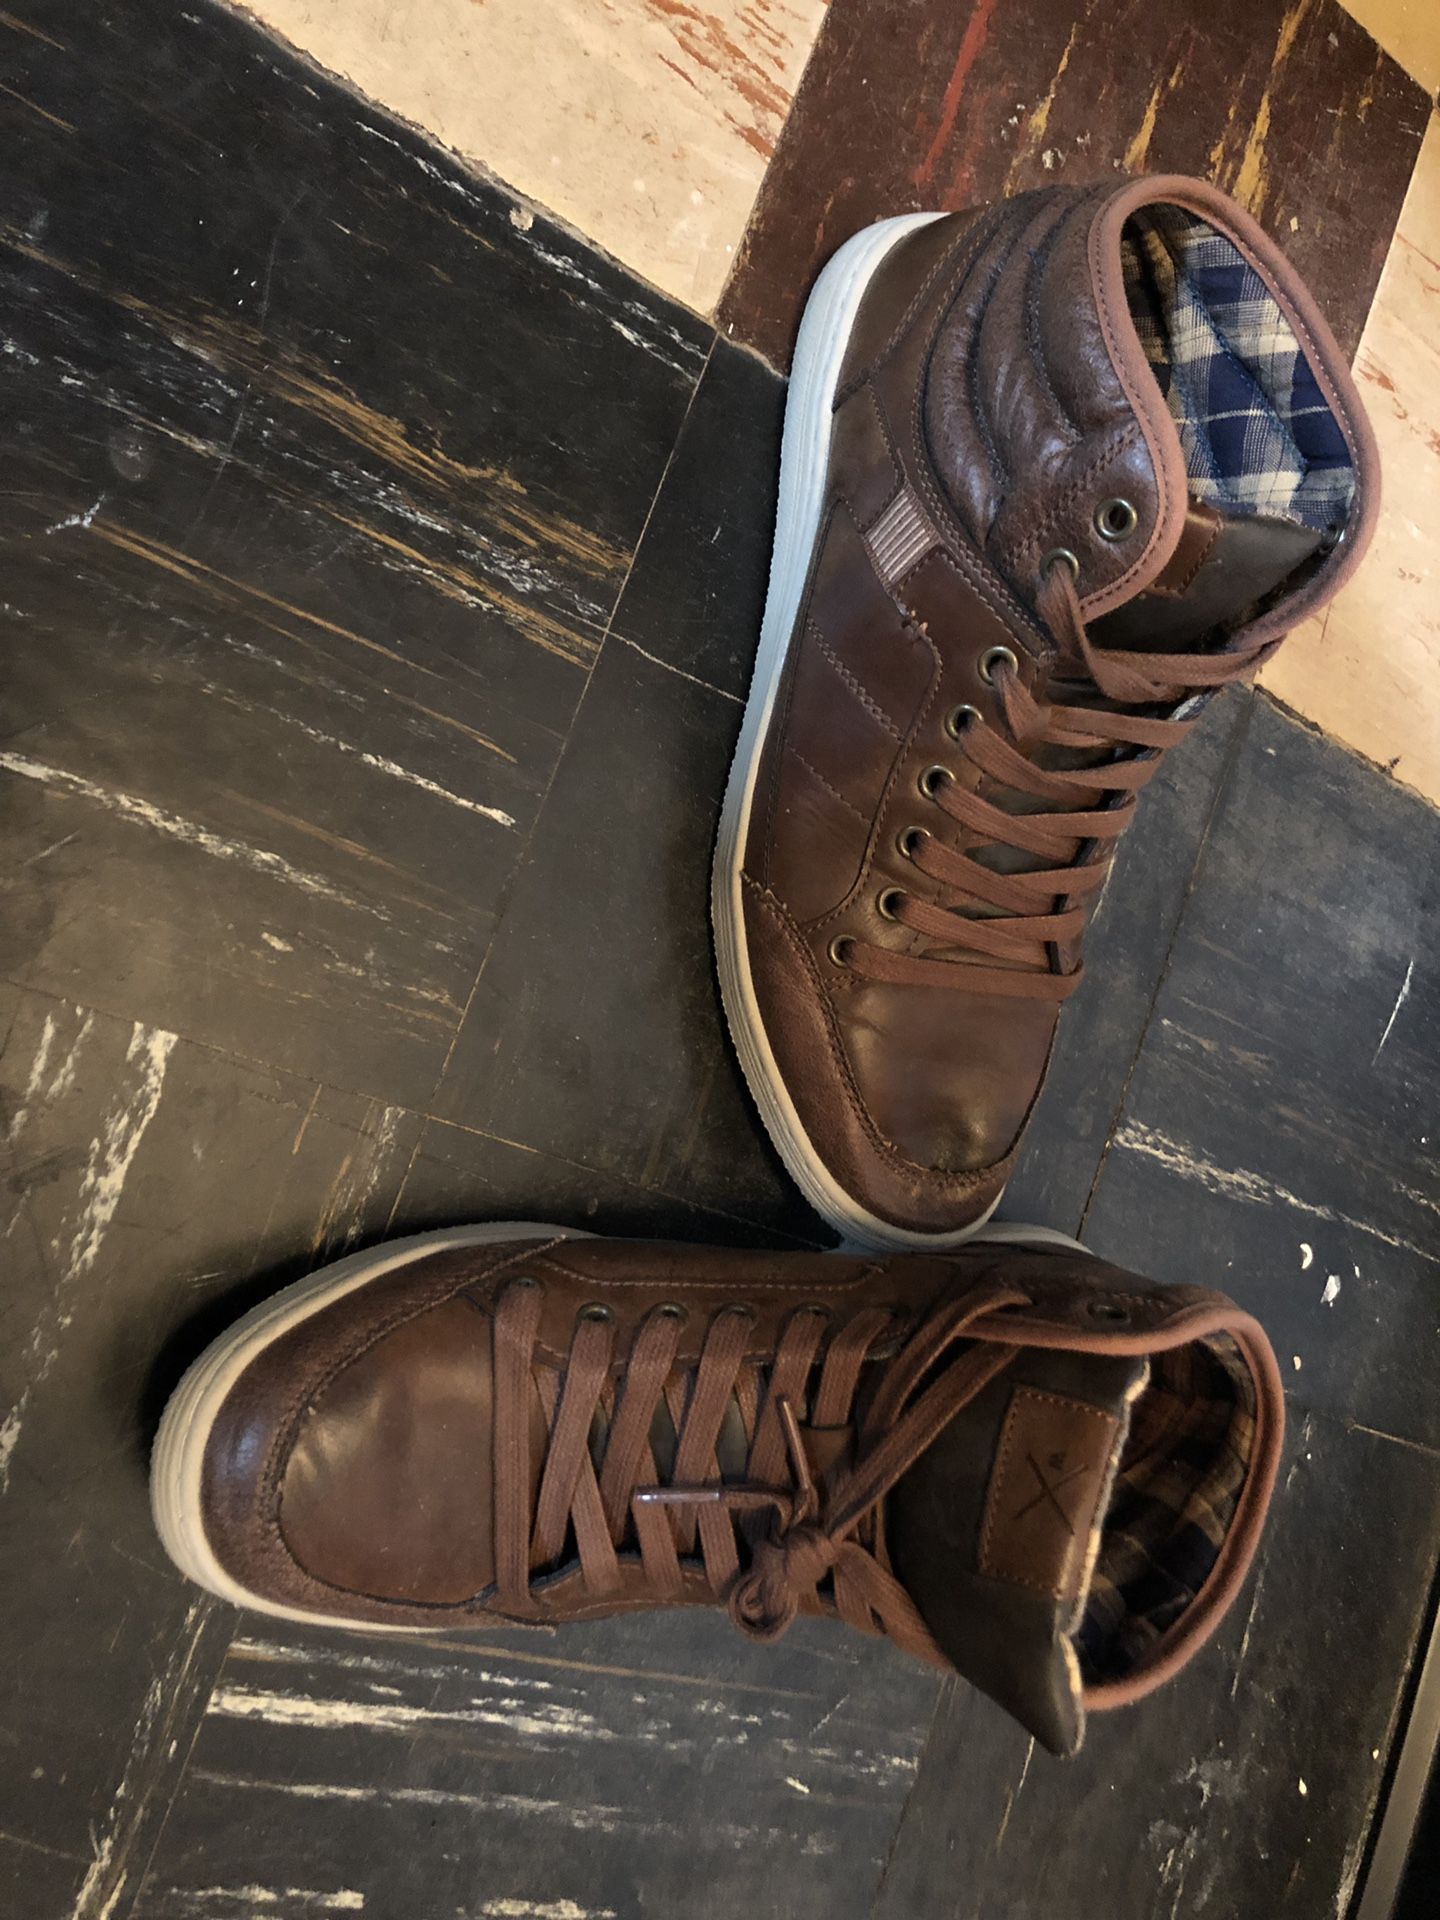 Sweet shoes, mint or new in box..Air max, lebrons, hirachi, Reebok classic , work boots, berkenstock, ASICS , Paul George.